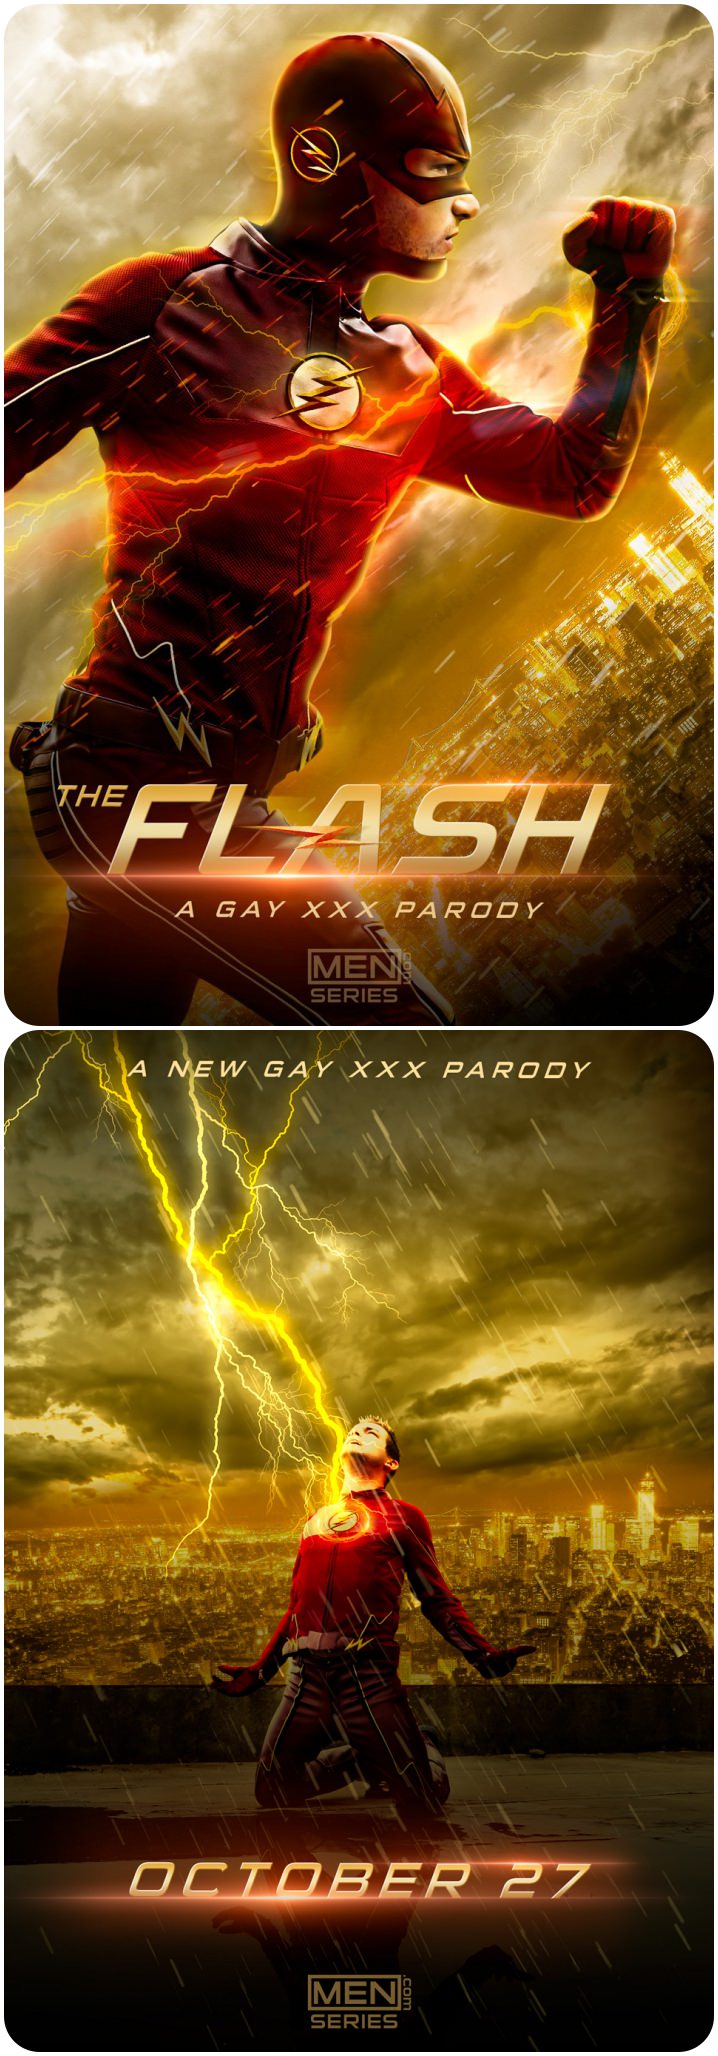 4-the-flash-gay-porn-parody-johnny-rapid